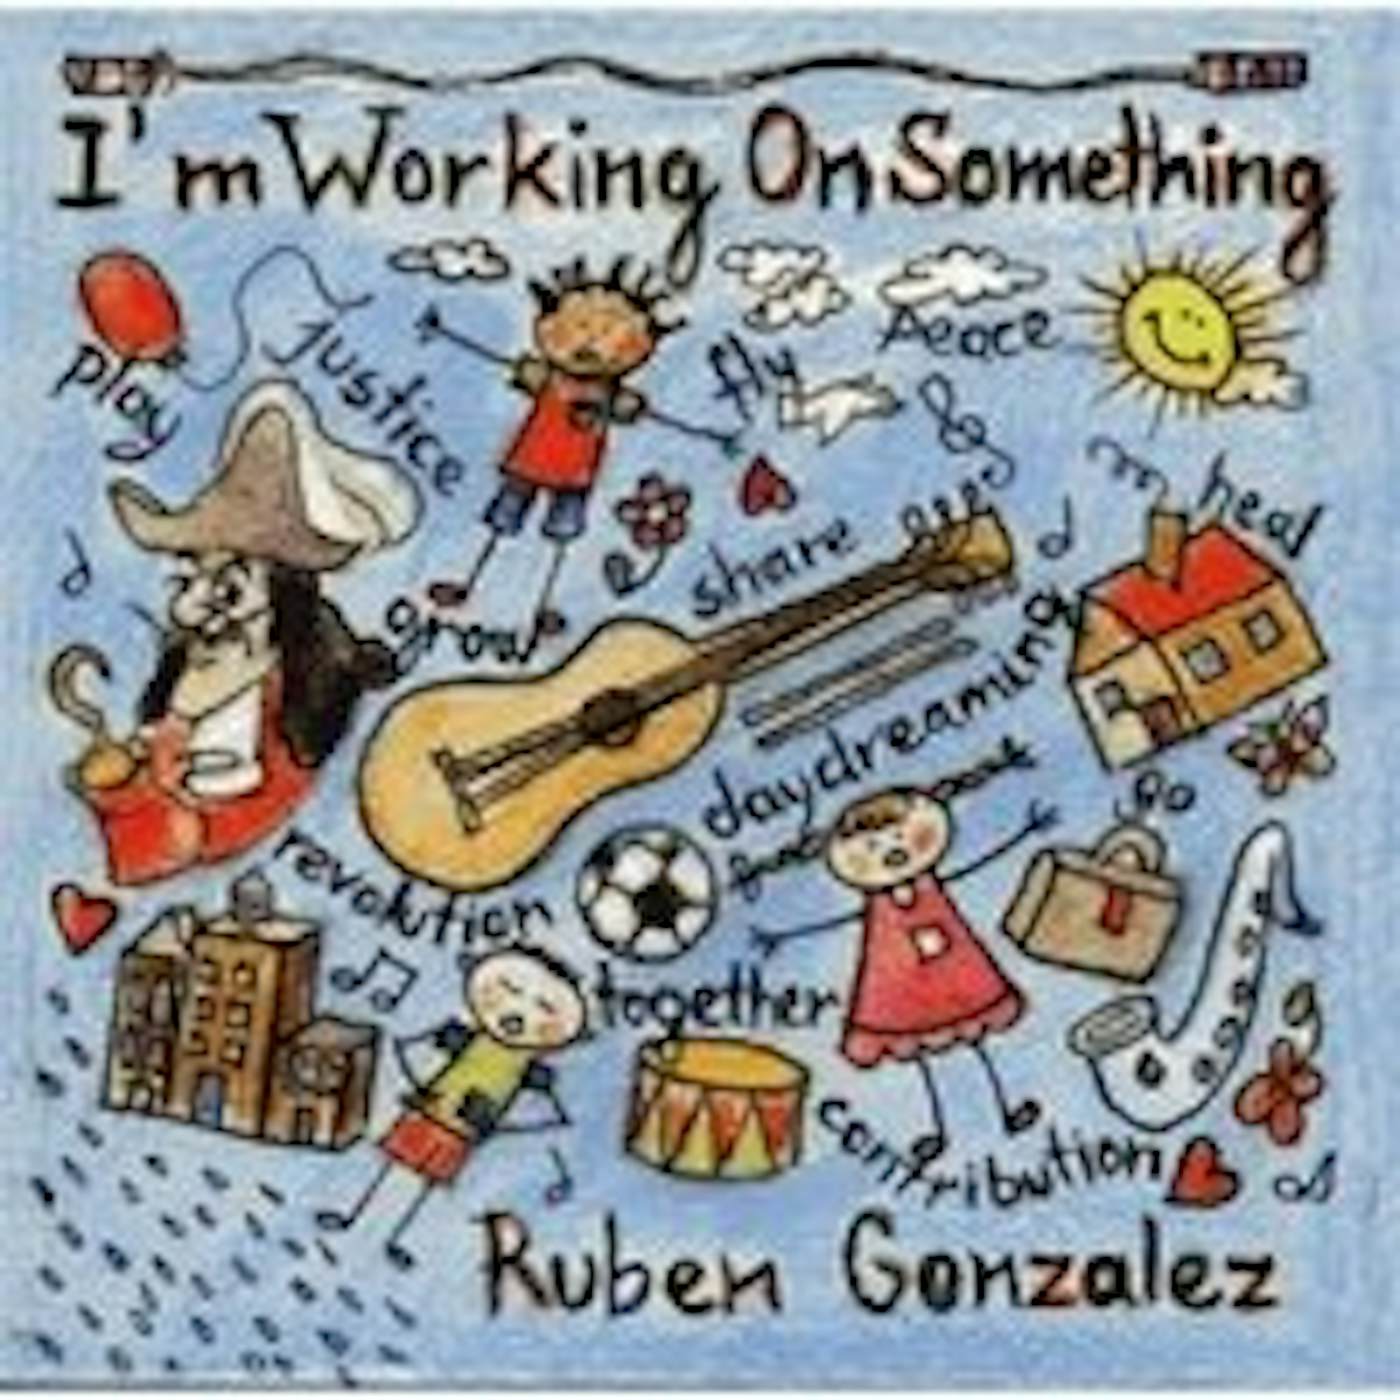 Ruben Gonzalez I'M WORKING ON SOMETHING CD